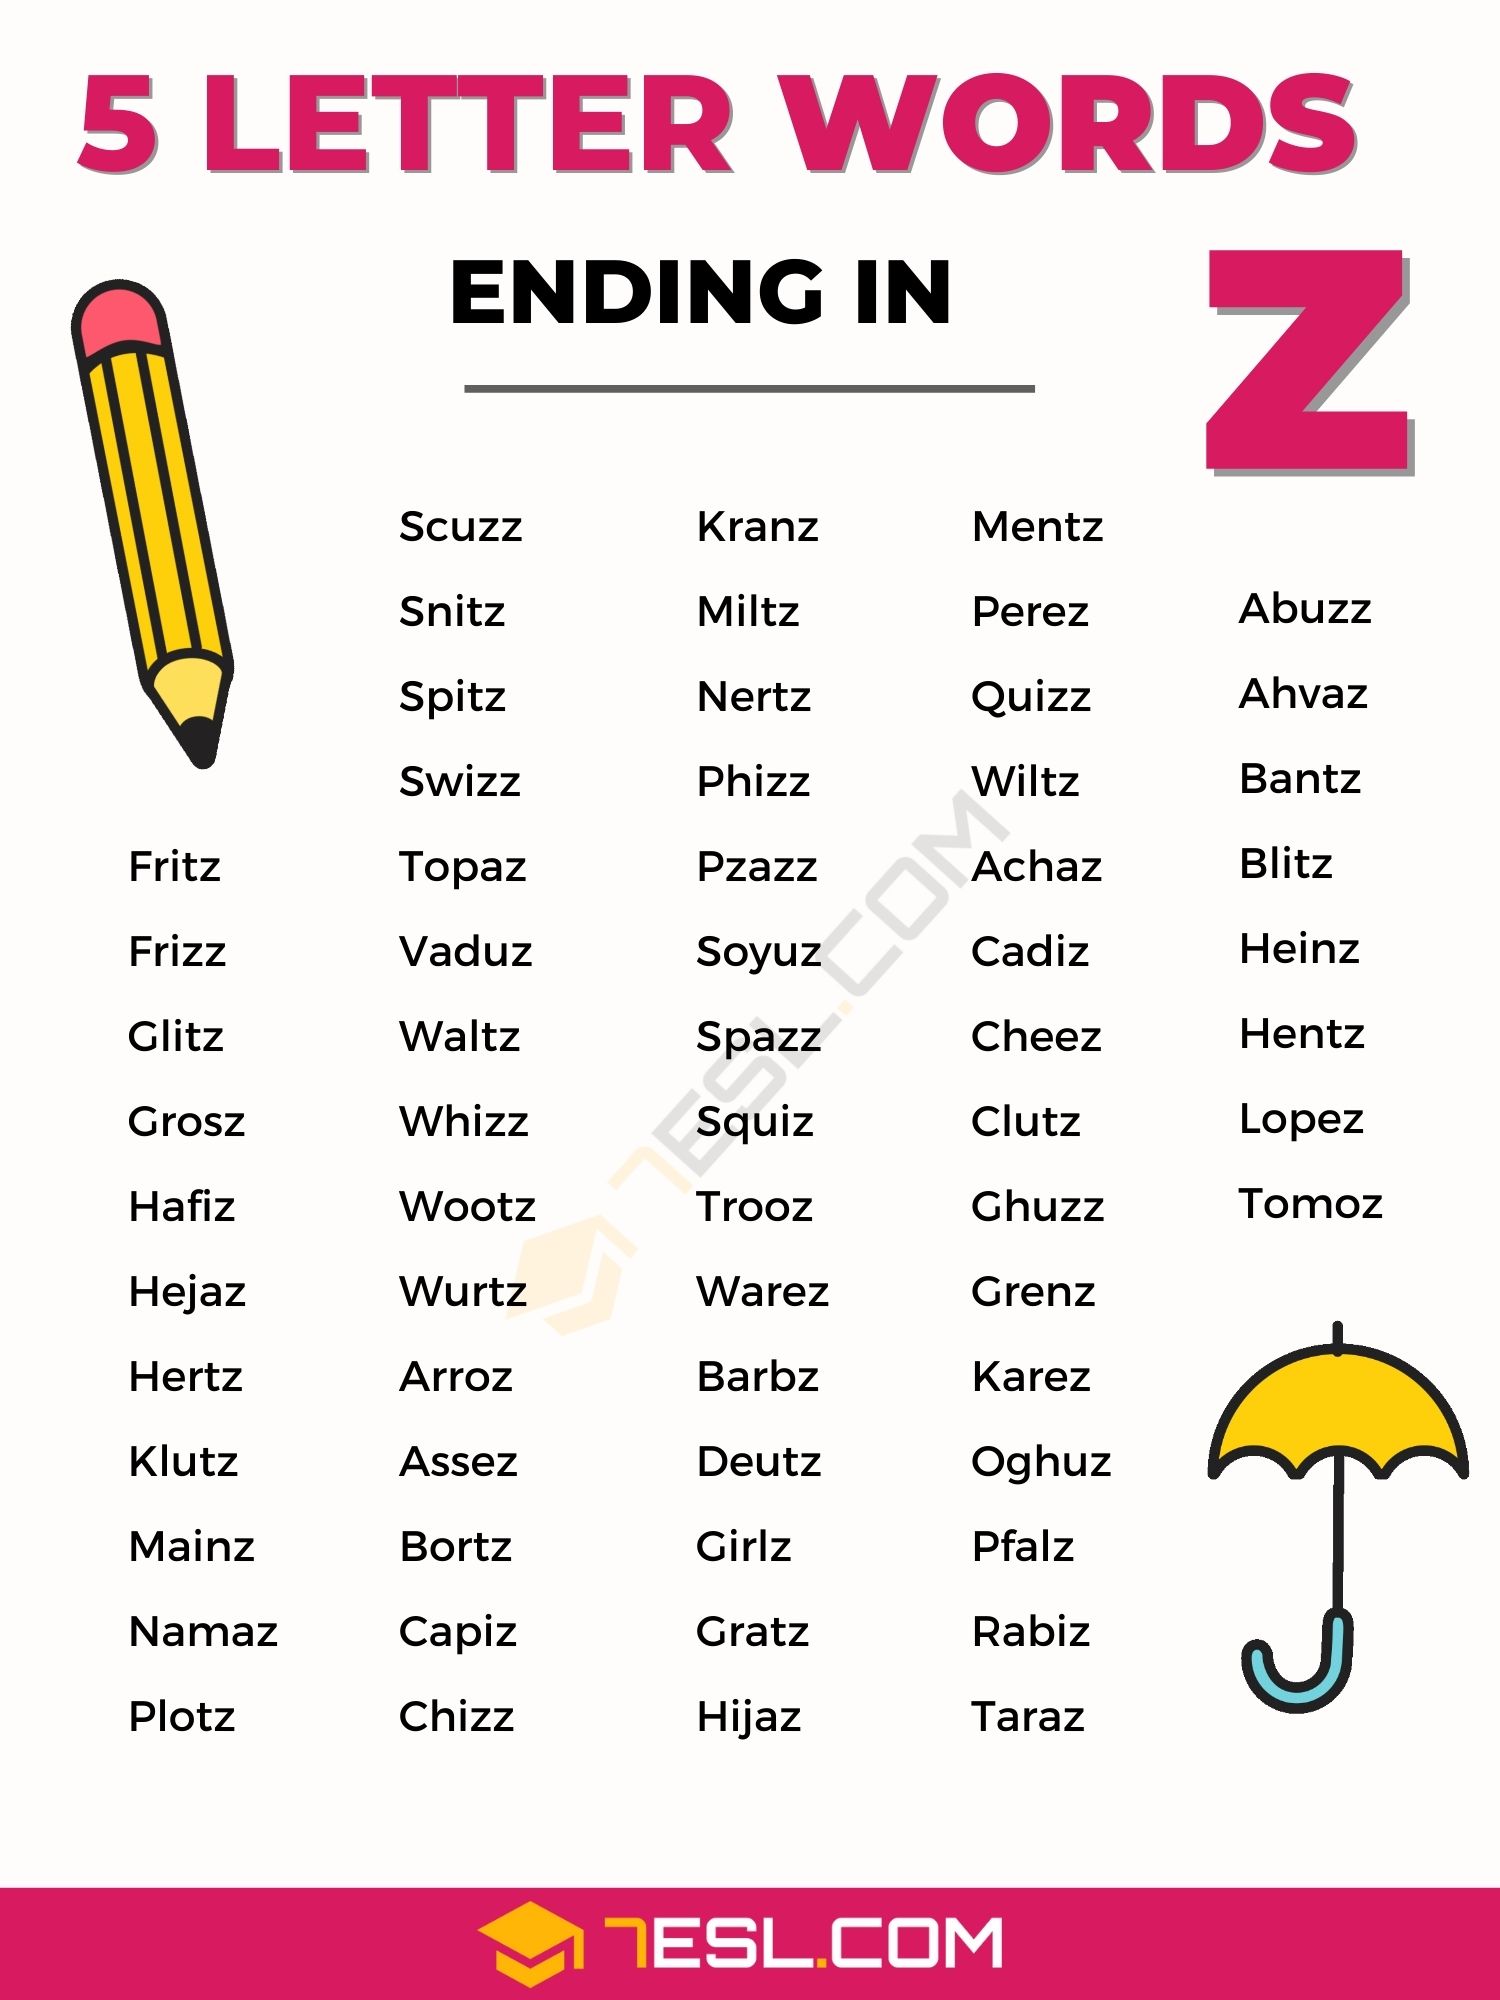 5 letter words ending in z